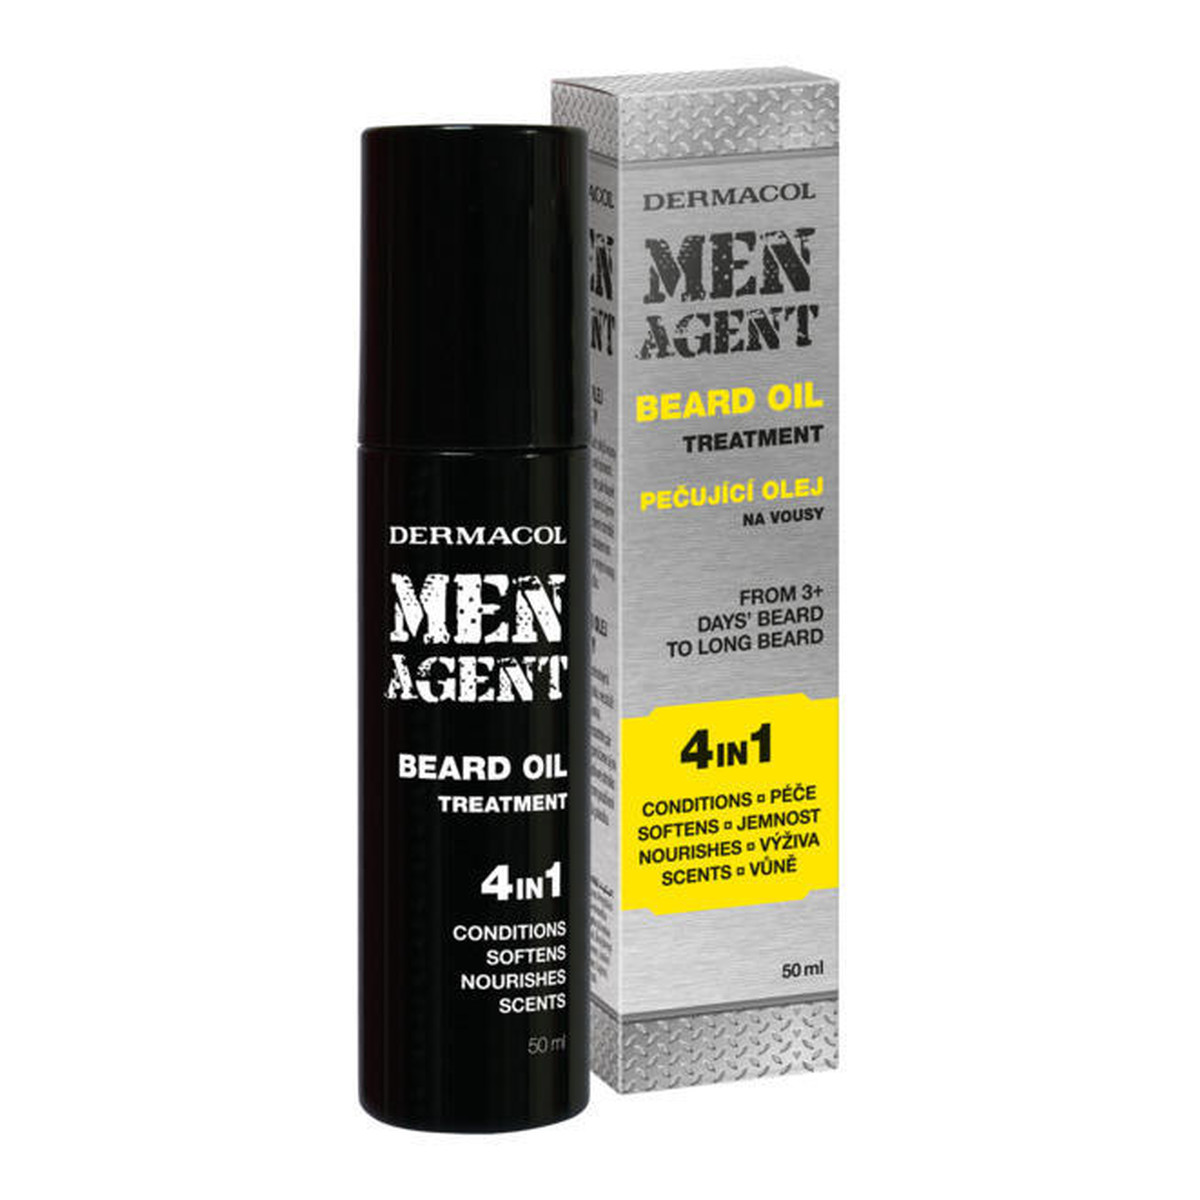 Dermacol MEN AGENT Beard oil treatment 4in1 olejek pielęgnacyjny do brody 50ml